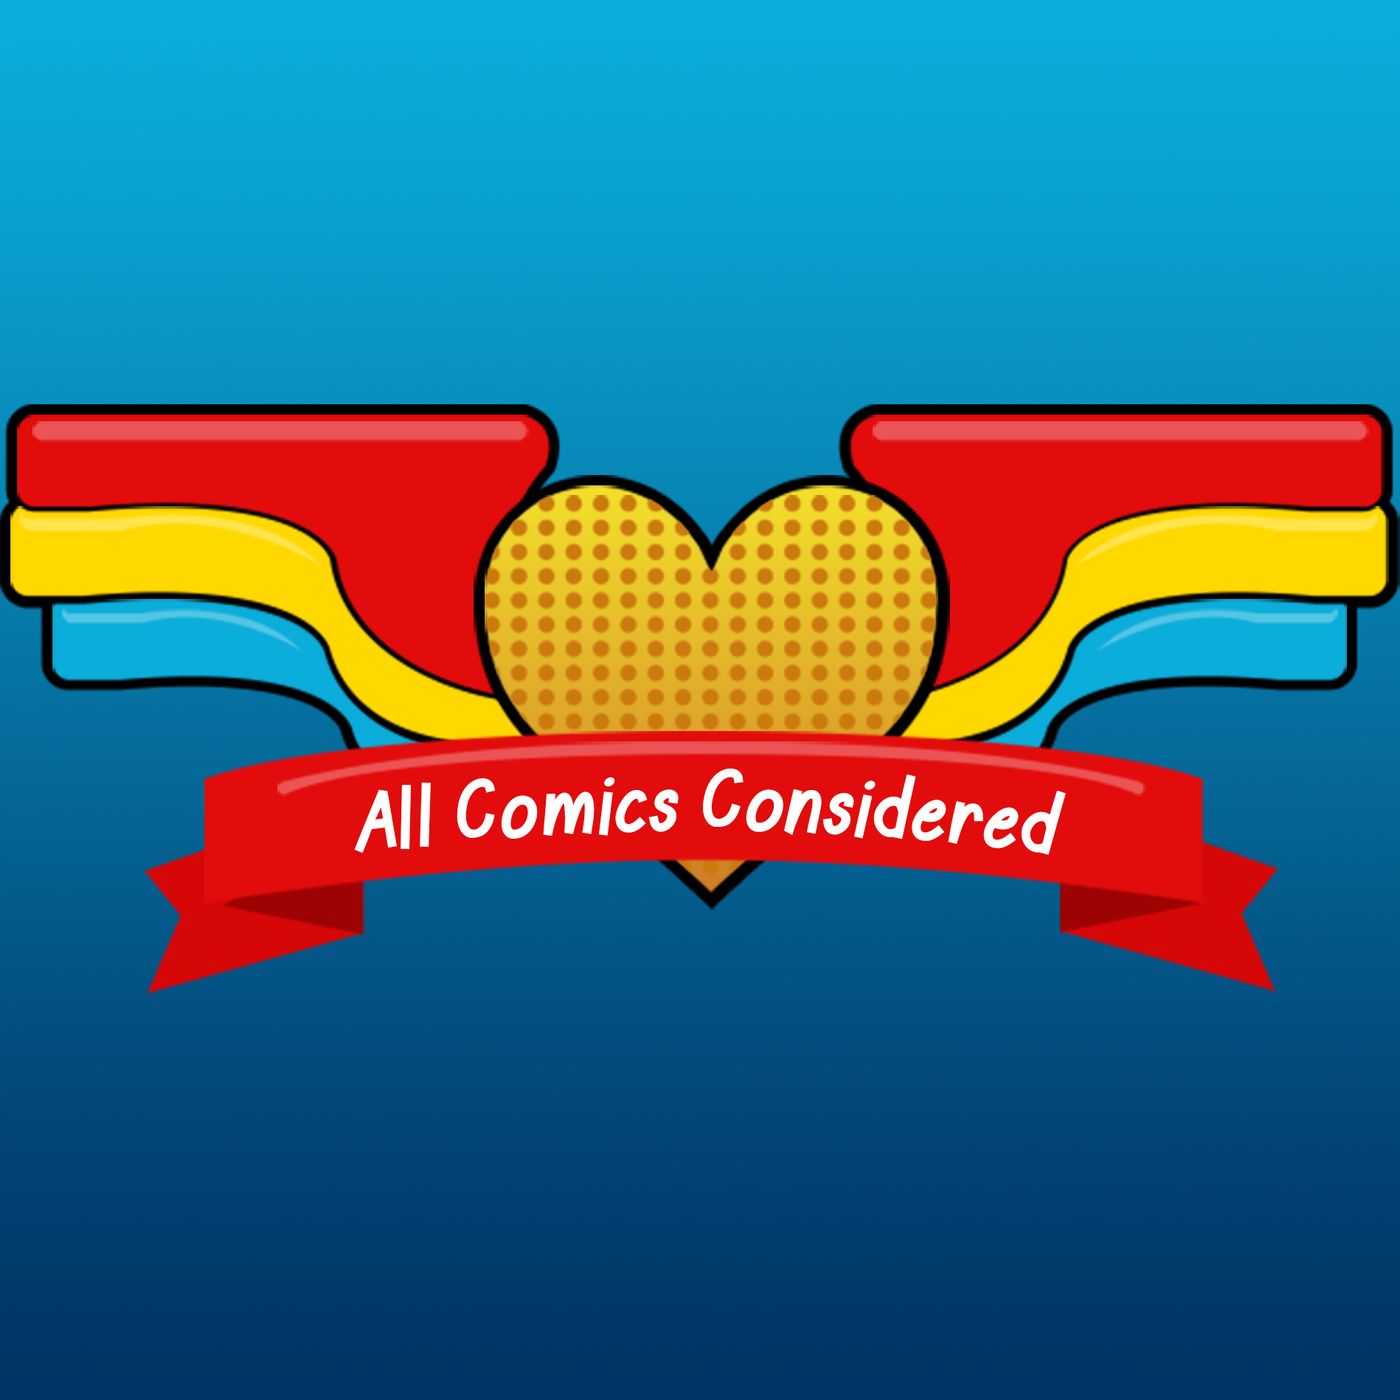 All Comics Considered